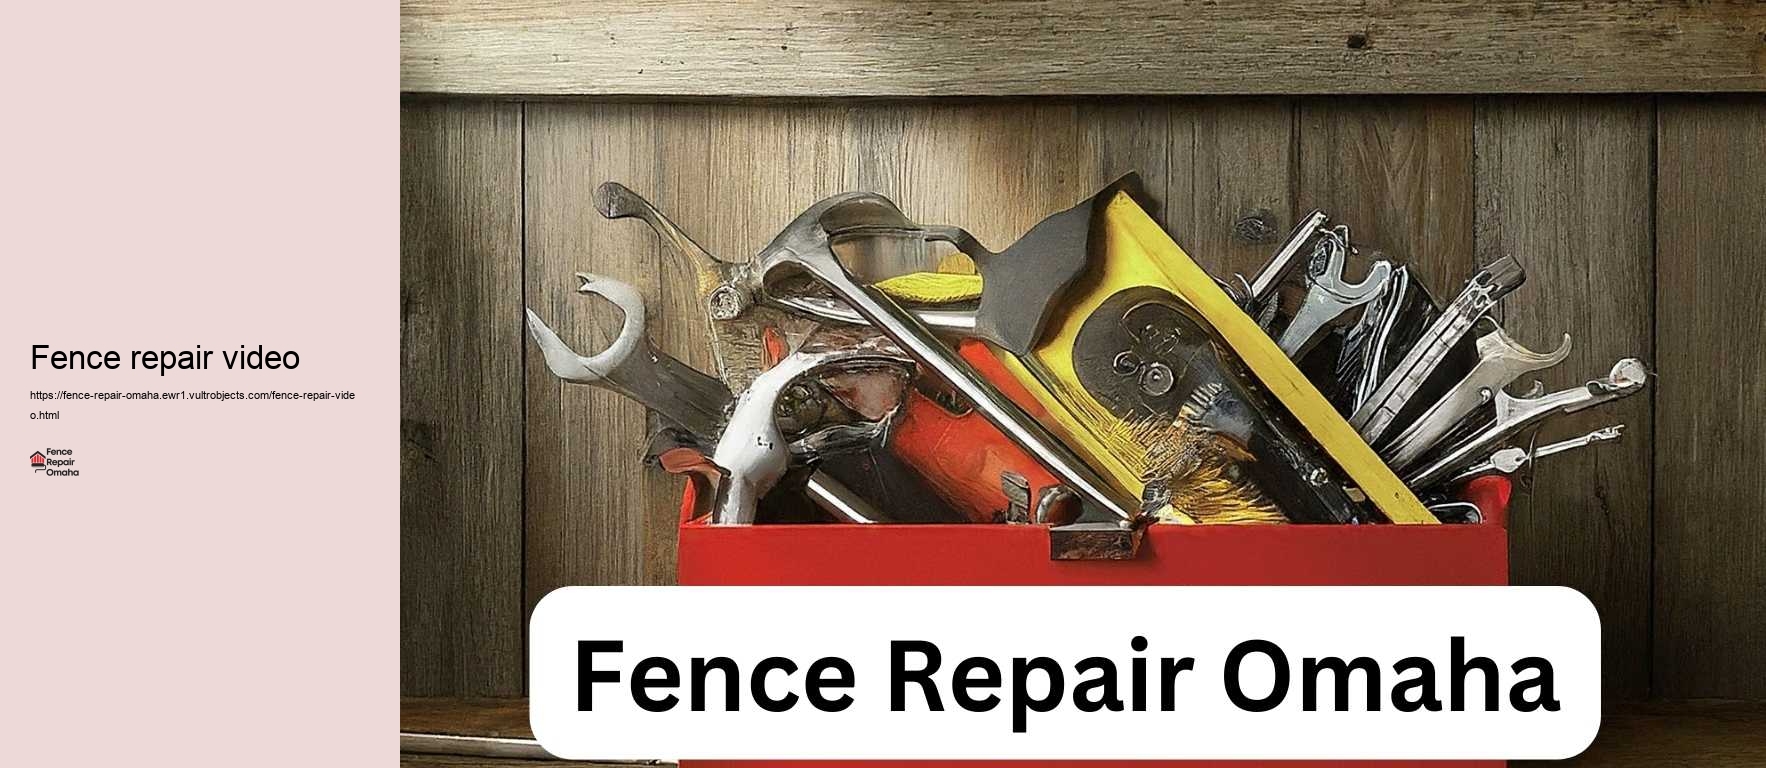 Fence repair video